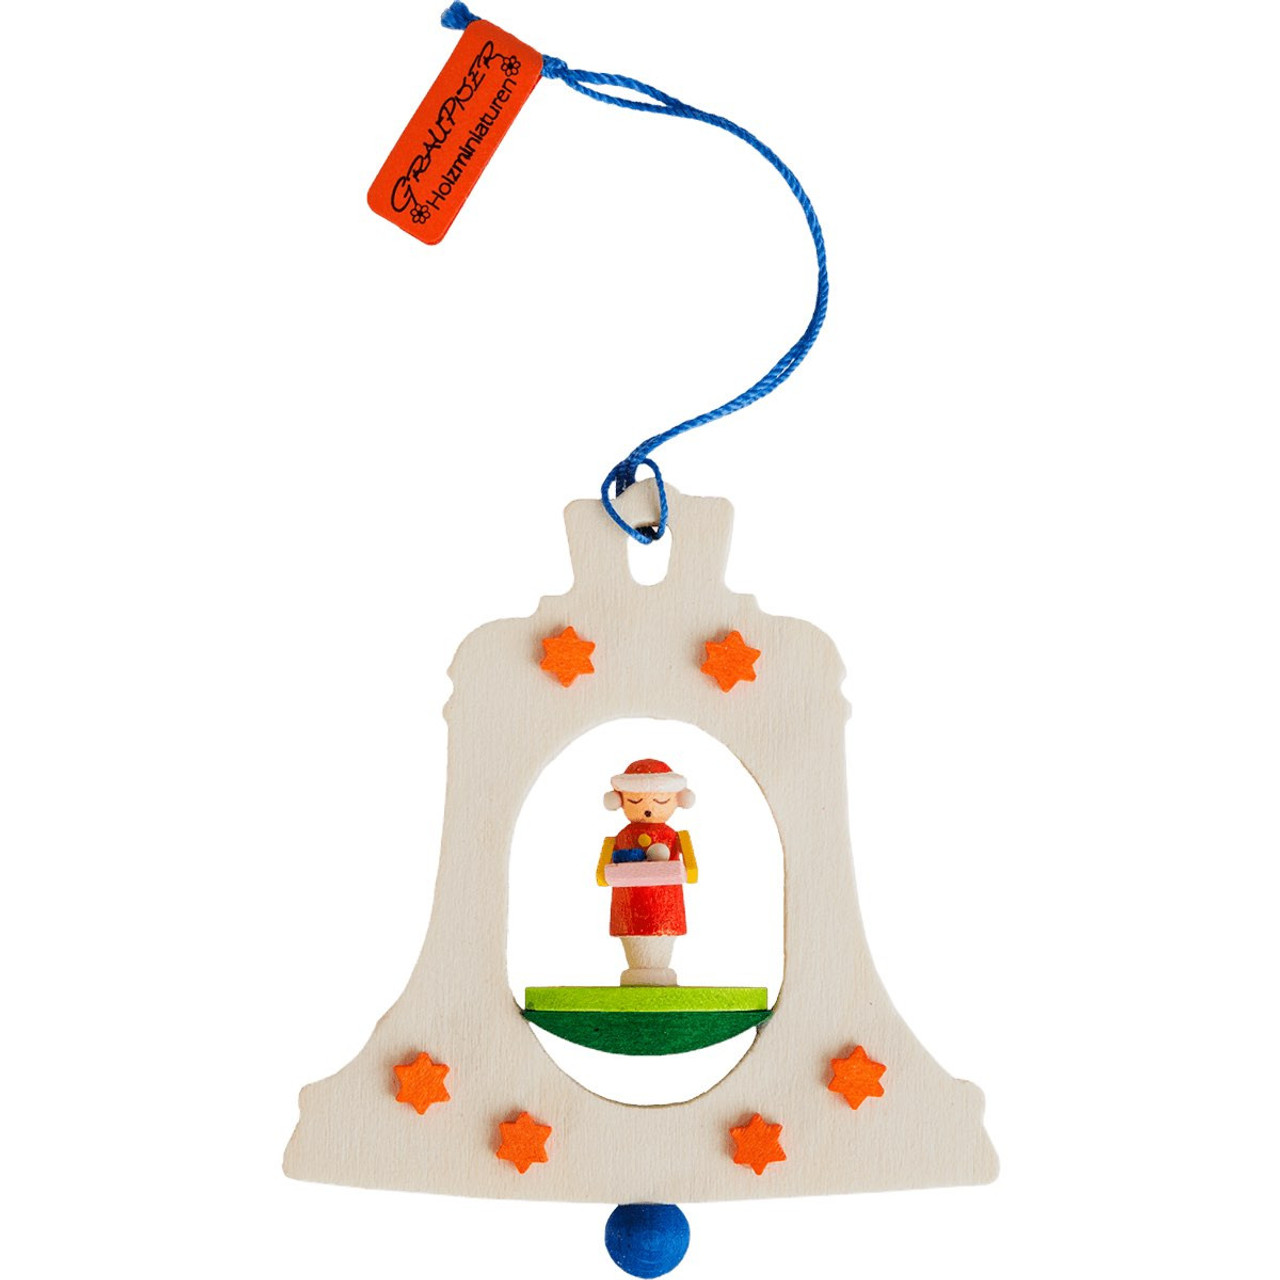 White Bell Shaped Ornament - Striezel Girl - ChristKindl-Markt